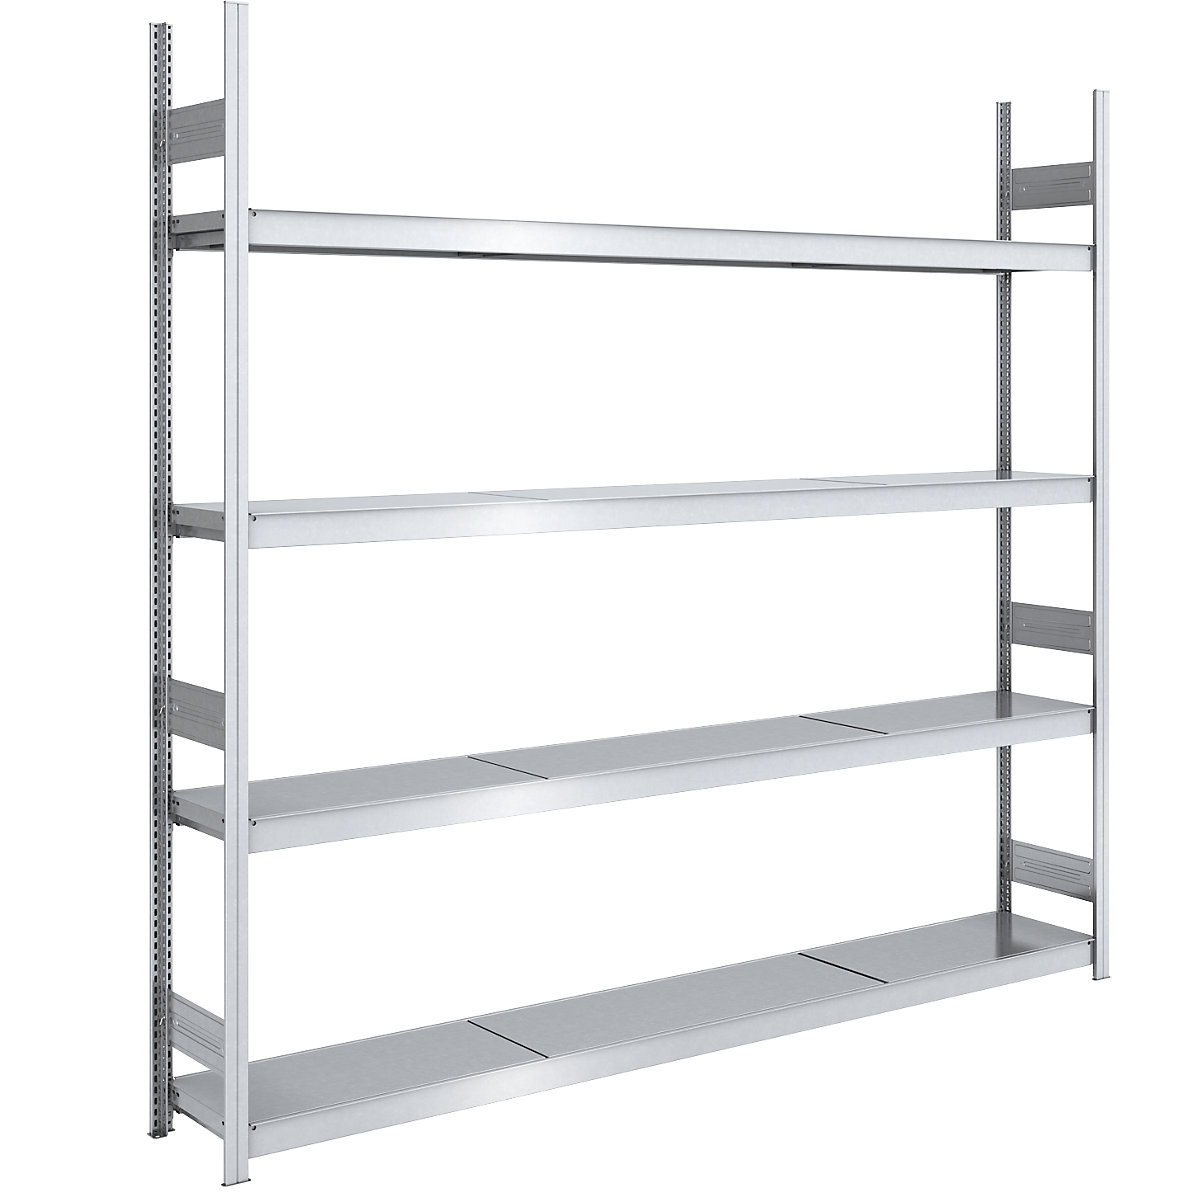 Wide span boltless shelving unit, zinc plated – hofe, shelf WxD 2500 x 400 mm, standard shelf unit, 4 steel shelves, height 2500 mm